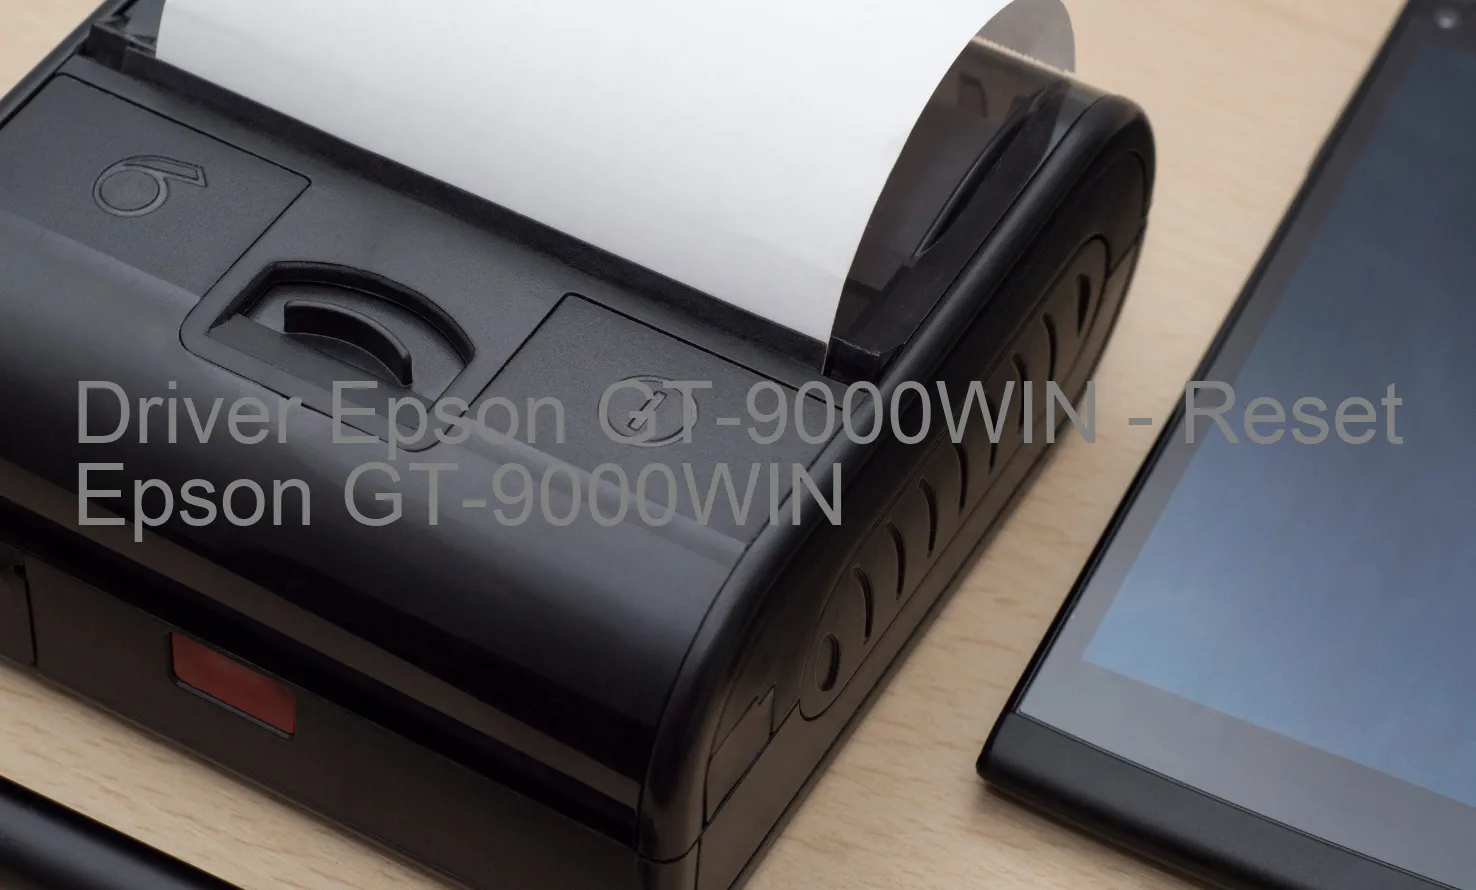 Epson GT-9000WINのドライバー、Epson GT-9000WINのリセットソフトウェア